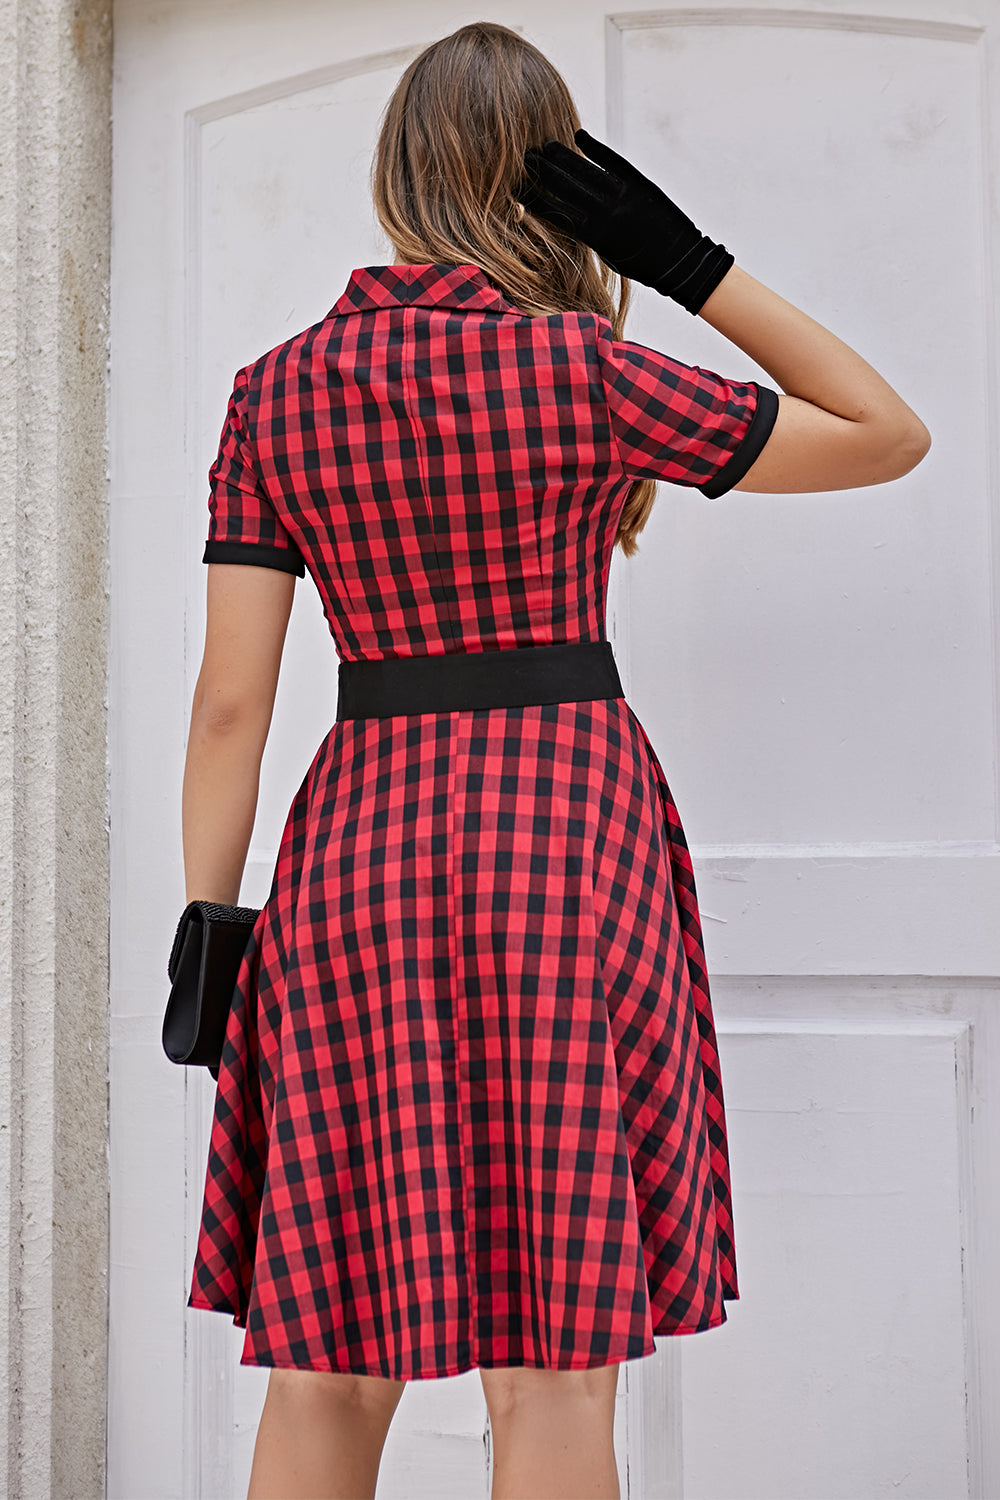 Zapaka Women Vintage Plaid 1950s Dress Short Sleeves Collared Swing Party  Dress – ZAPAKA